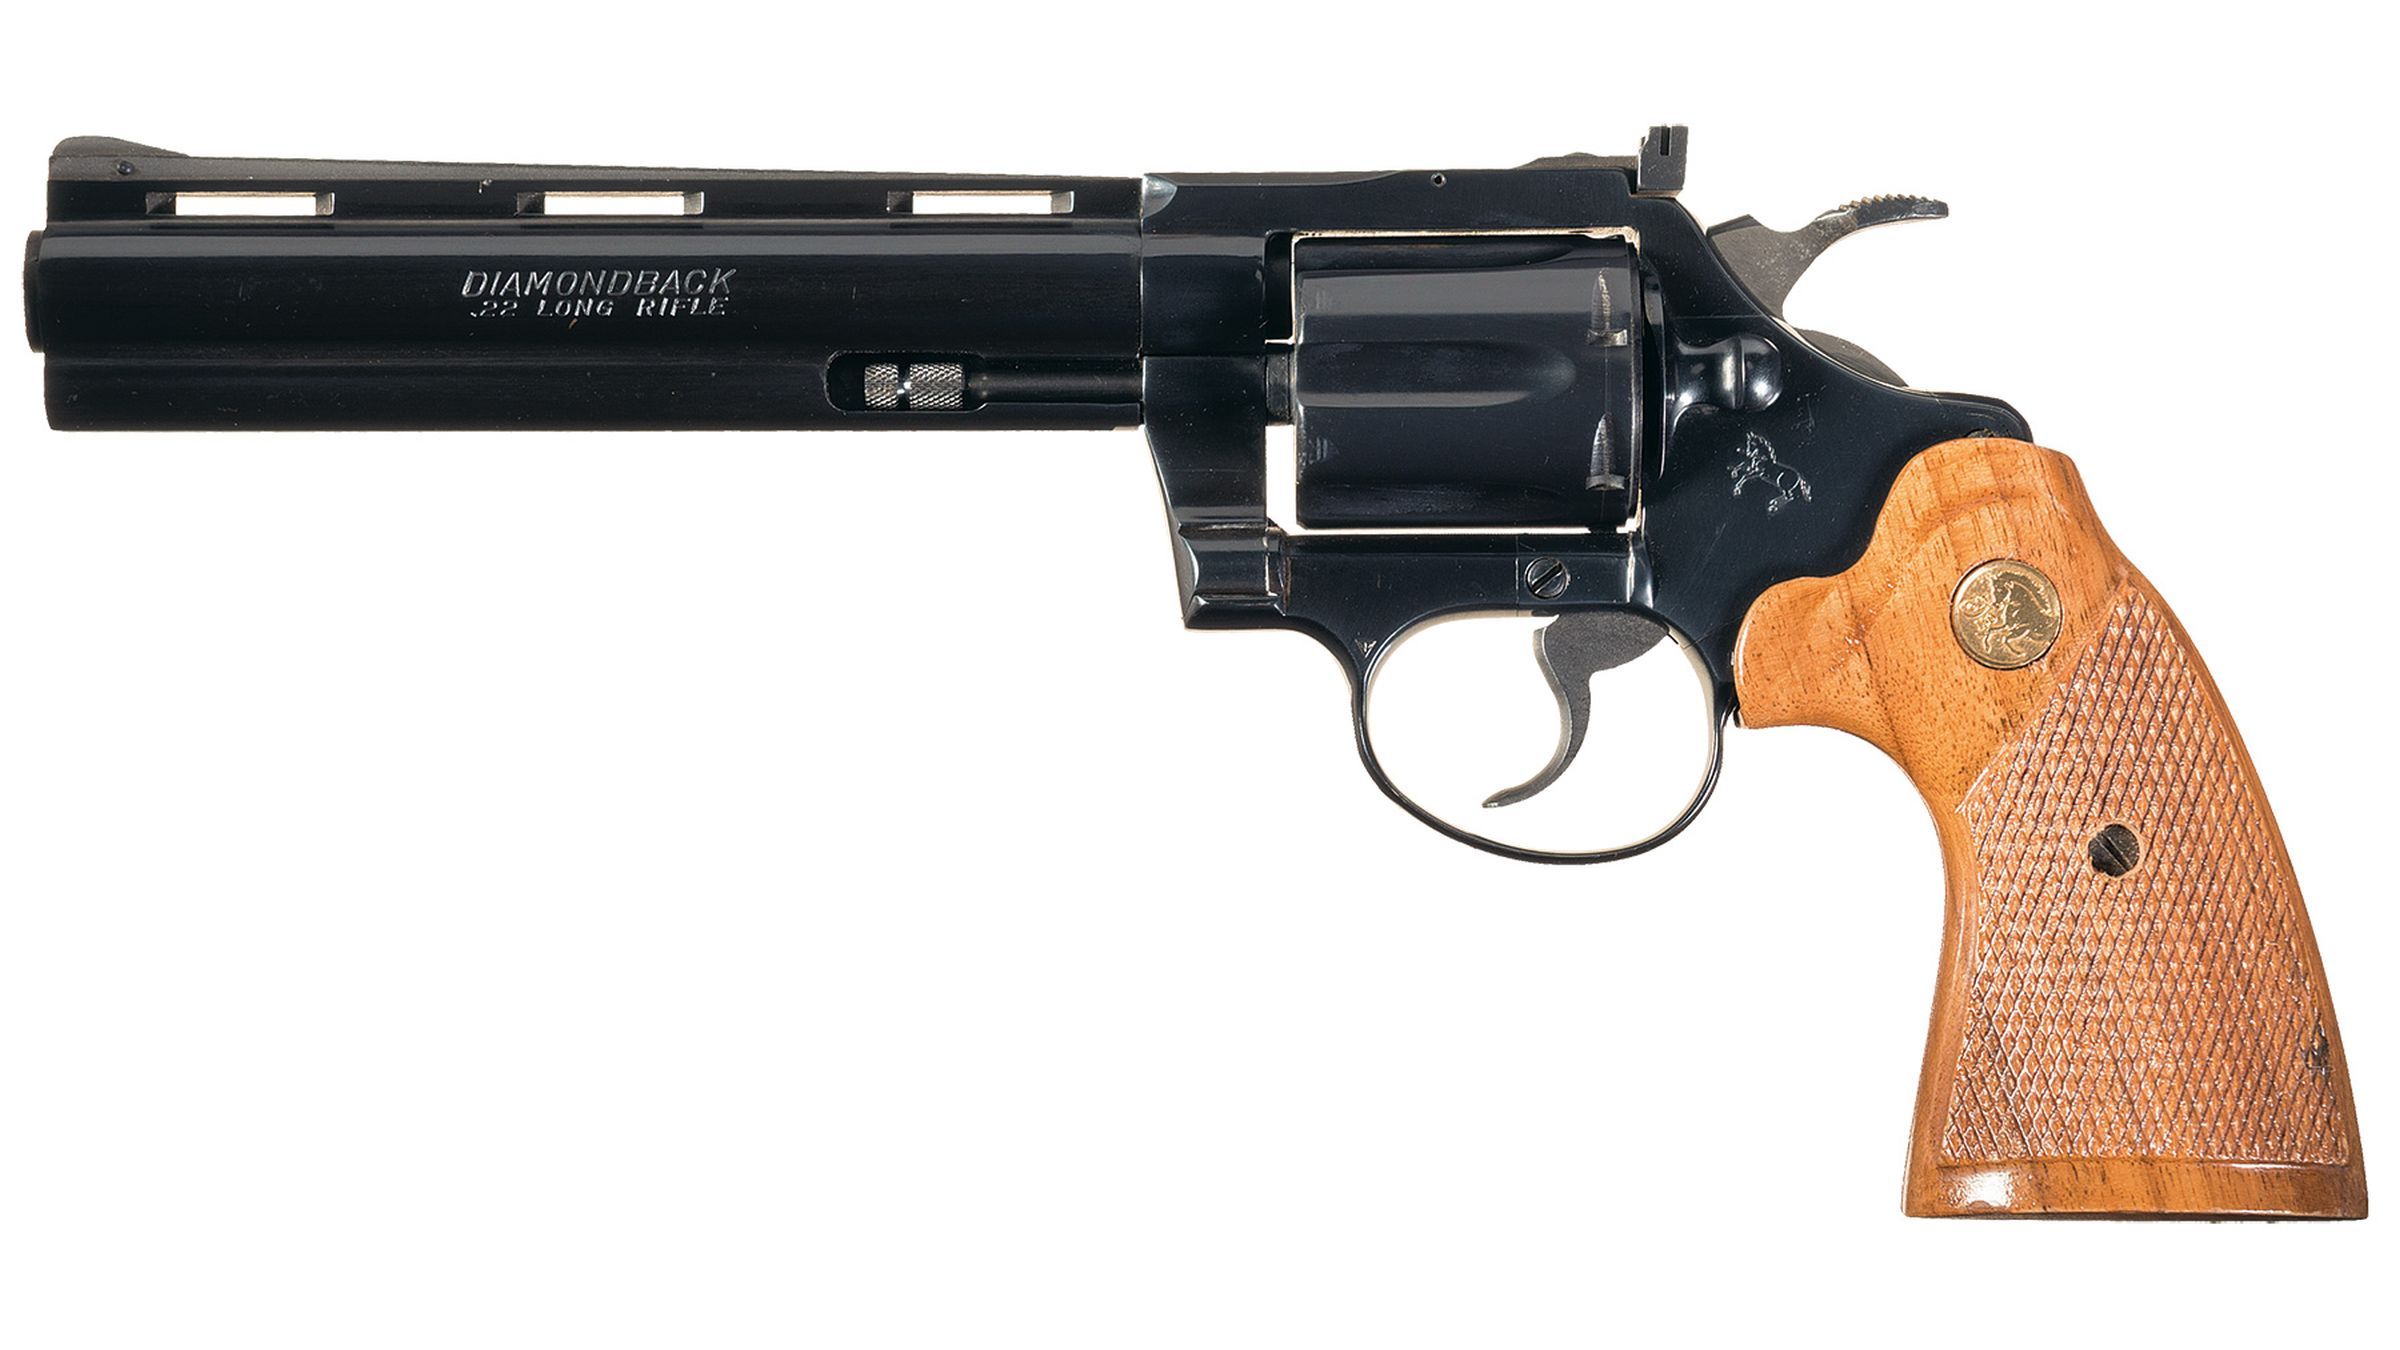 Colt Diamondback Revolver.